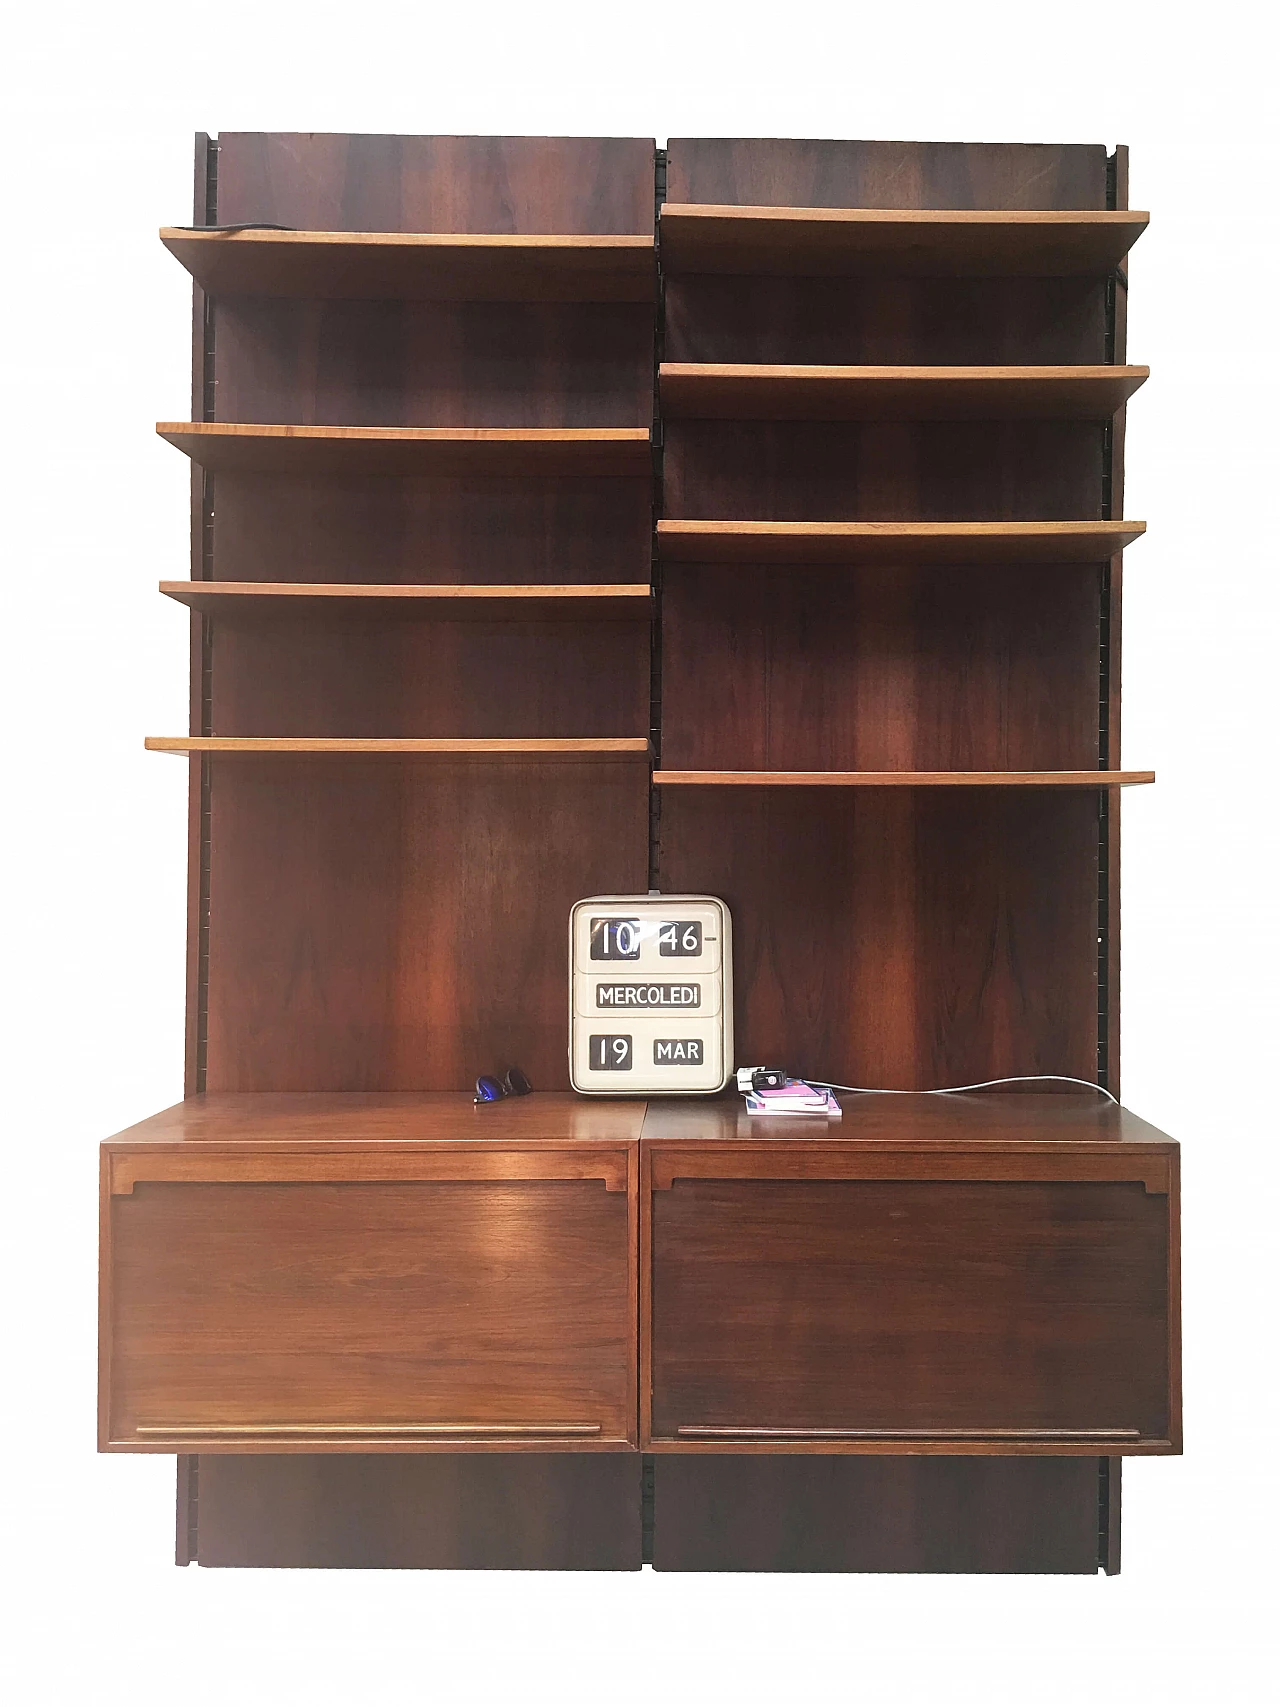 Rosewood bookcase by Gianfranco Frattini for Bernini, Italian manufacture 1070956